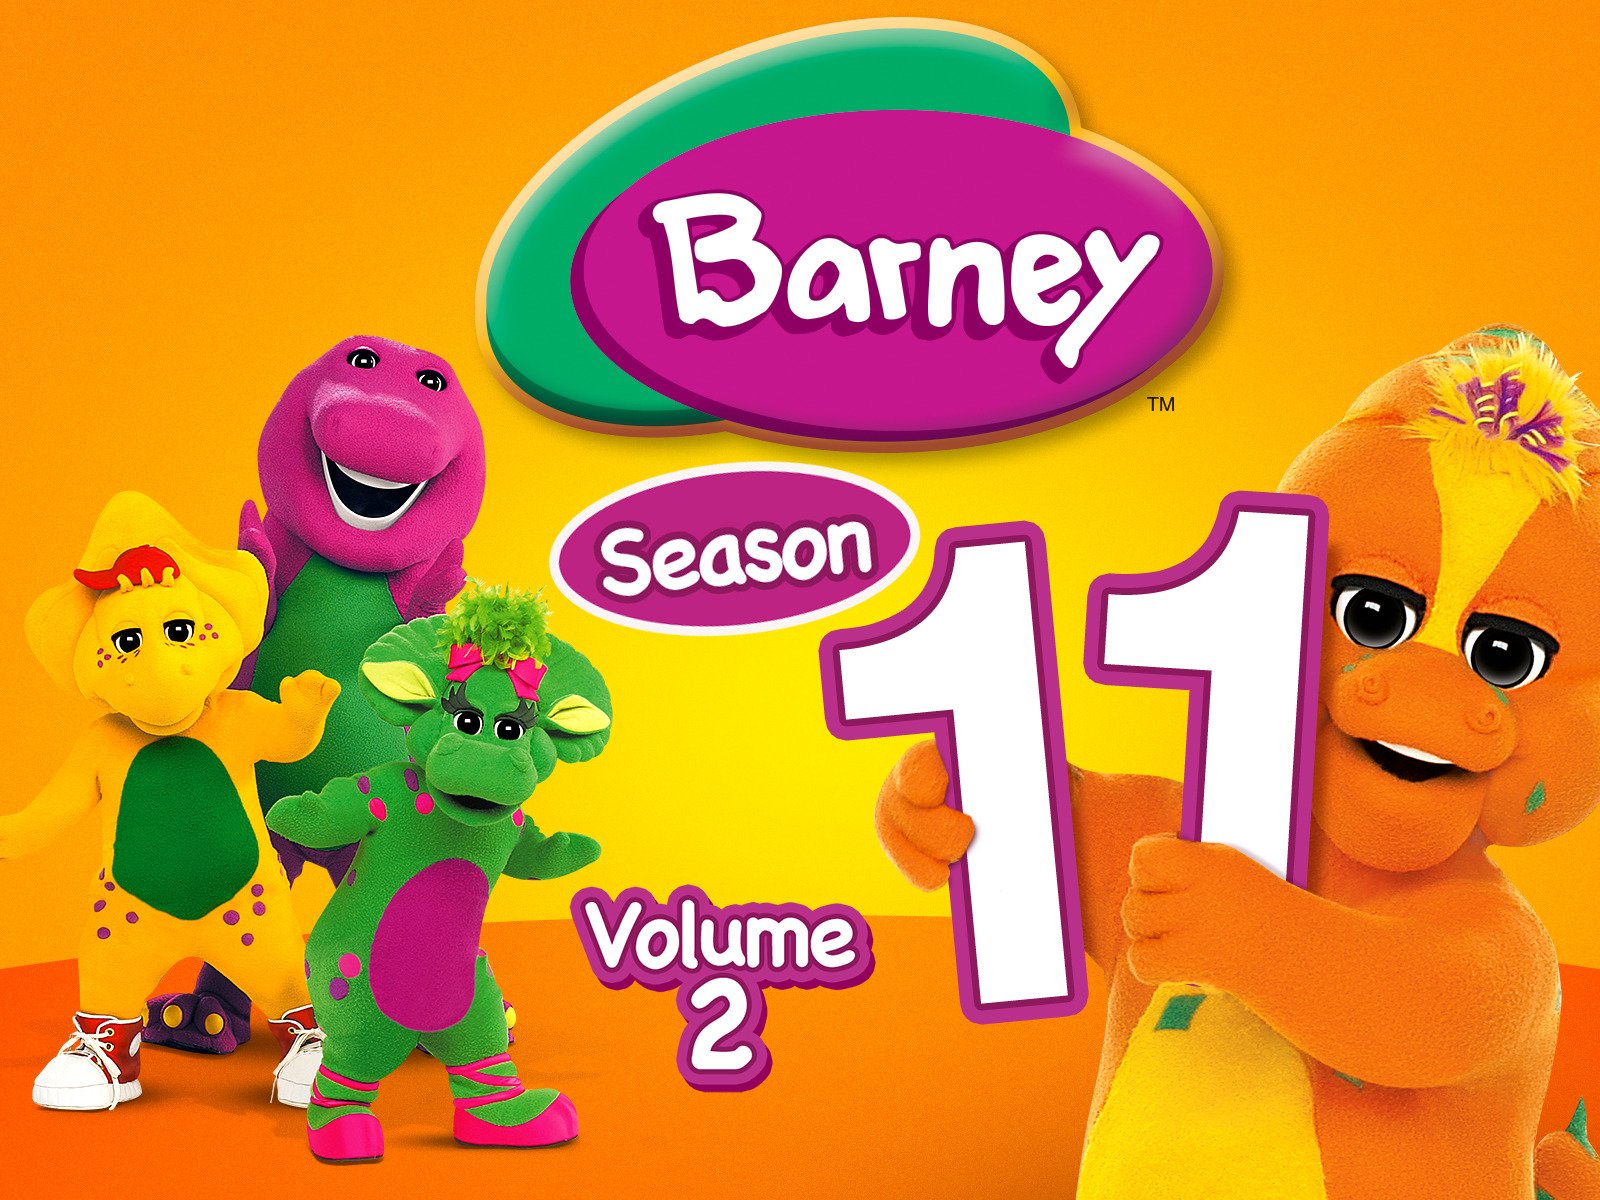 Mua Barney Season 11 Volume 2 trên Amazon Mỹ chính hãng 2023 | Giaonhan247